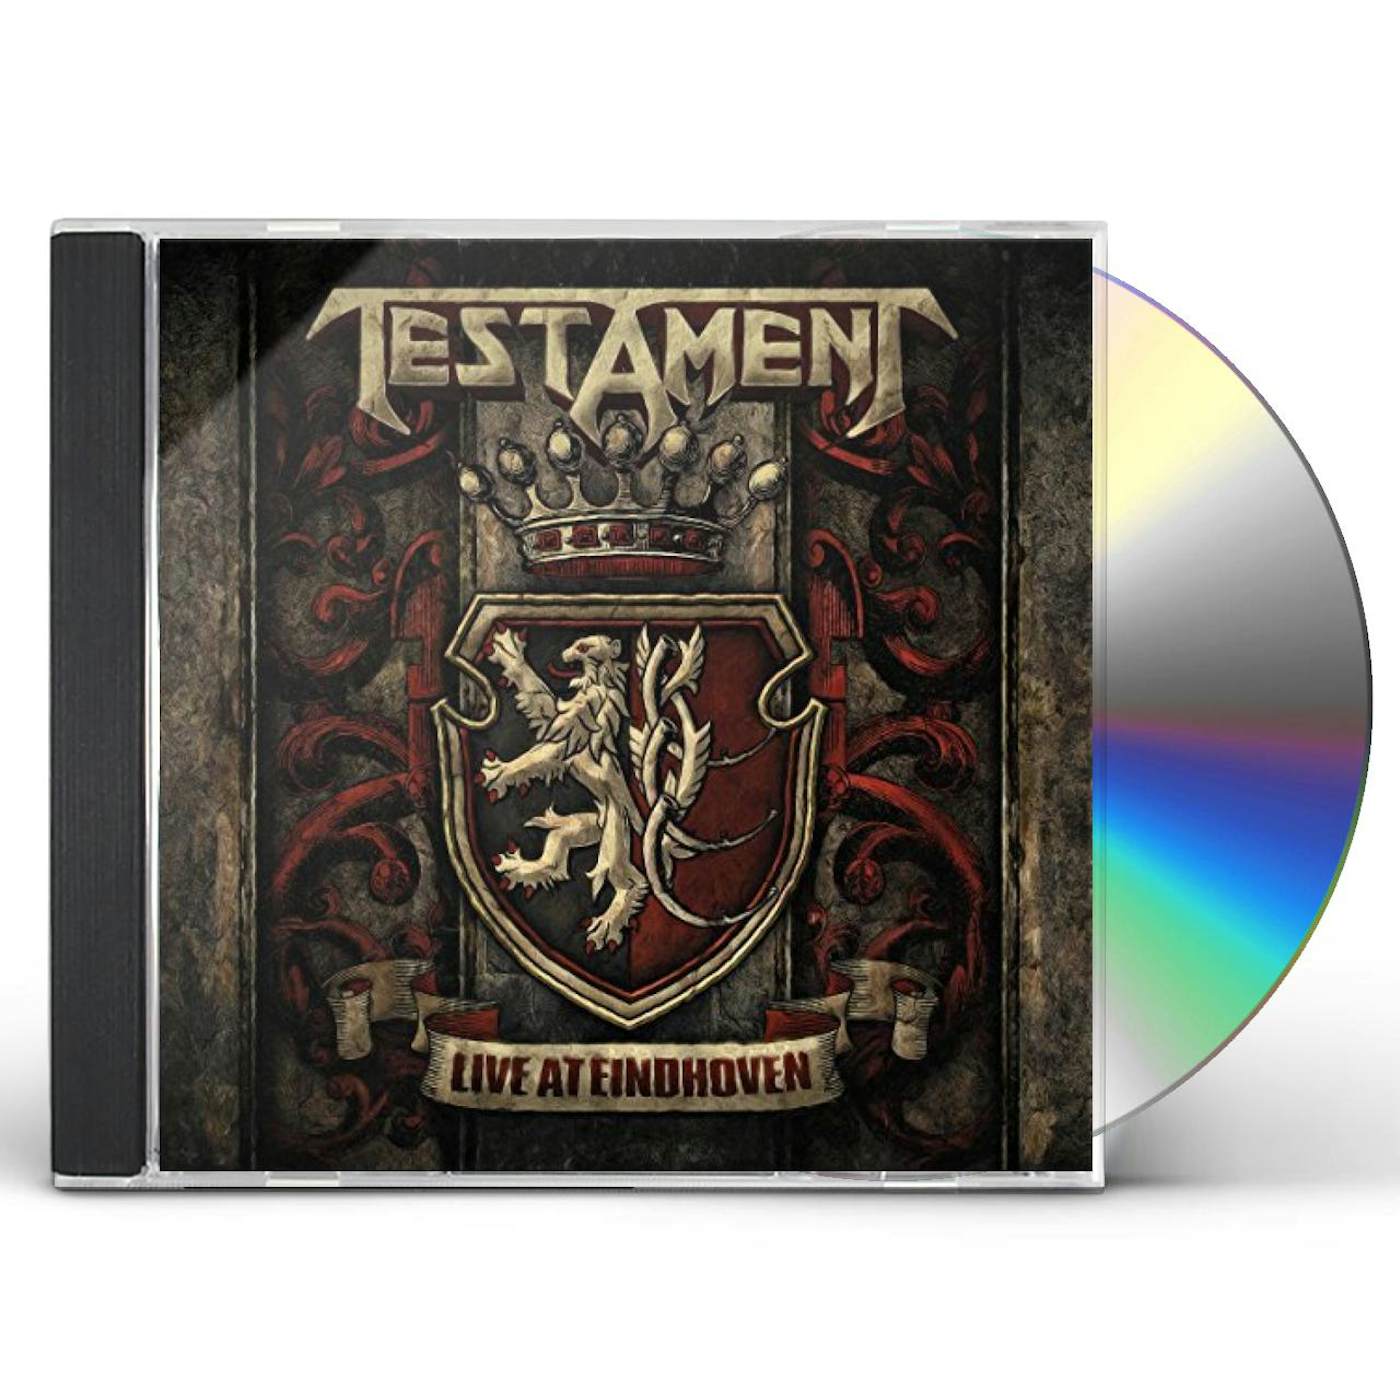 Testament LIVE AT EINDHOVEN CD